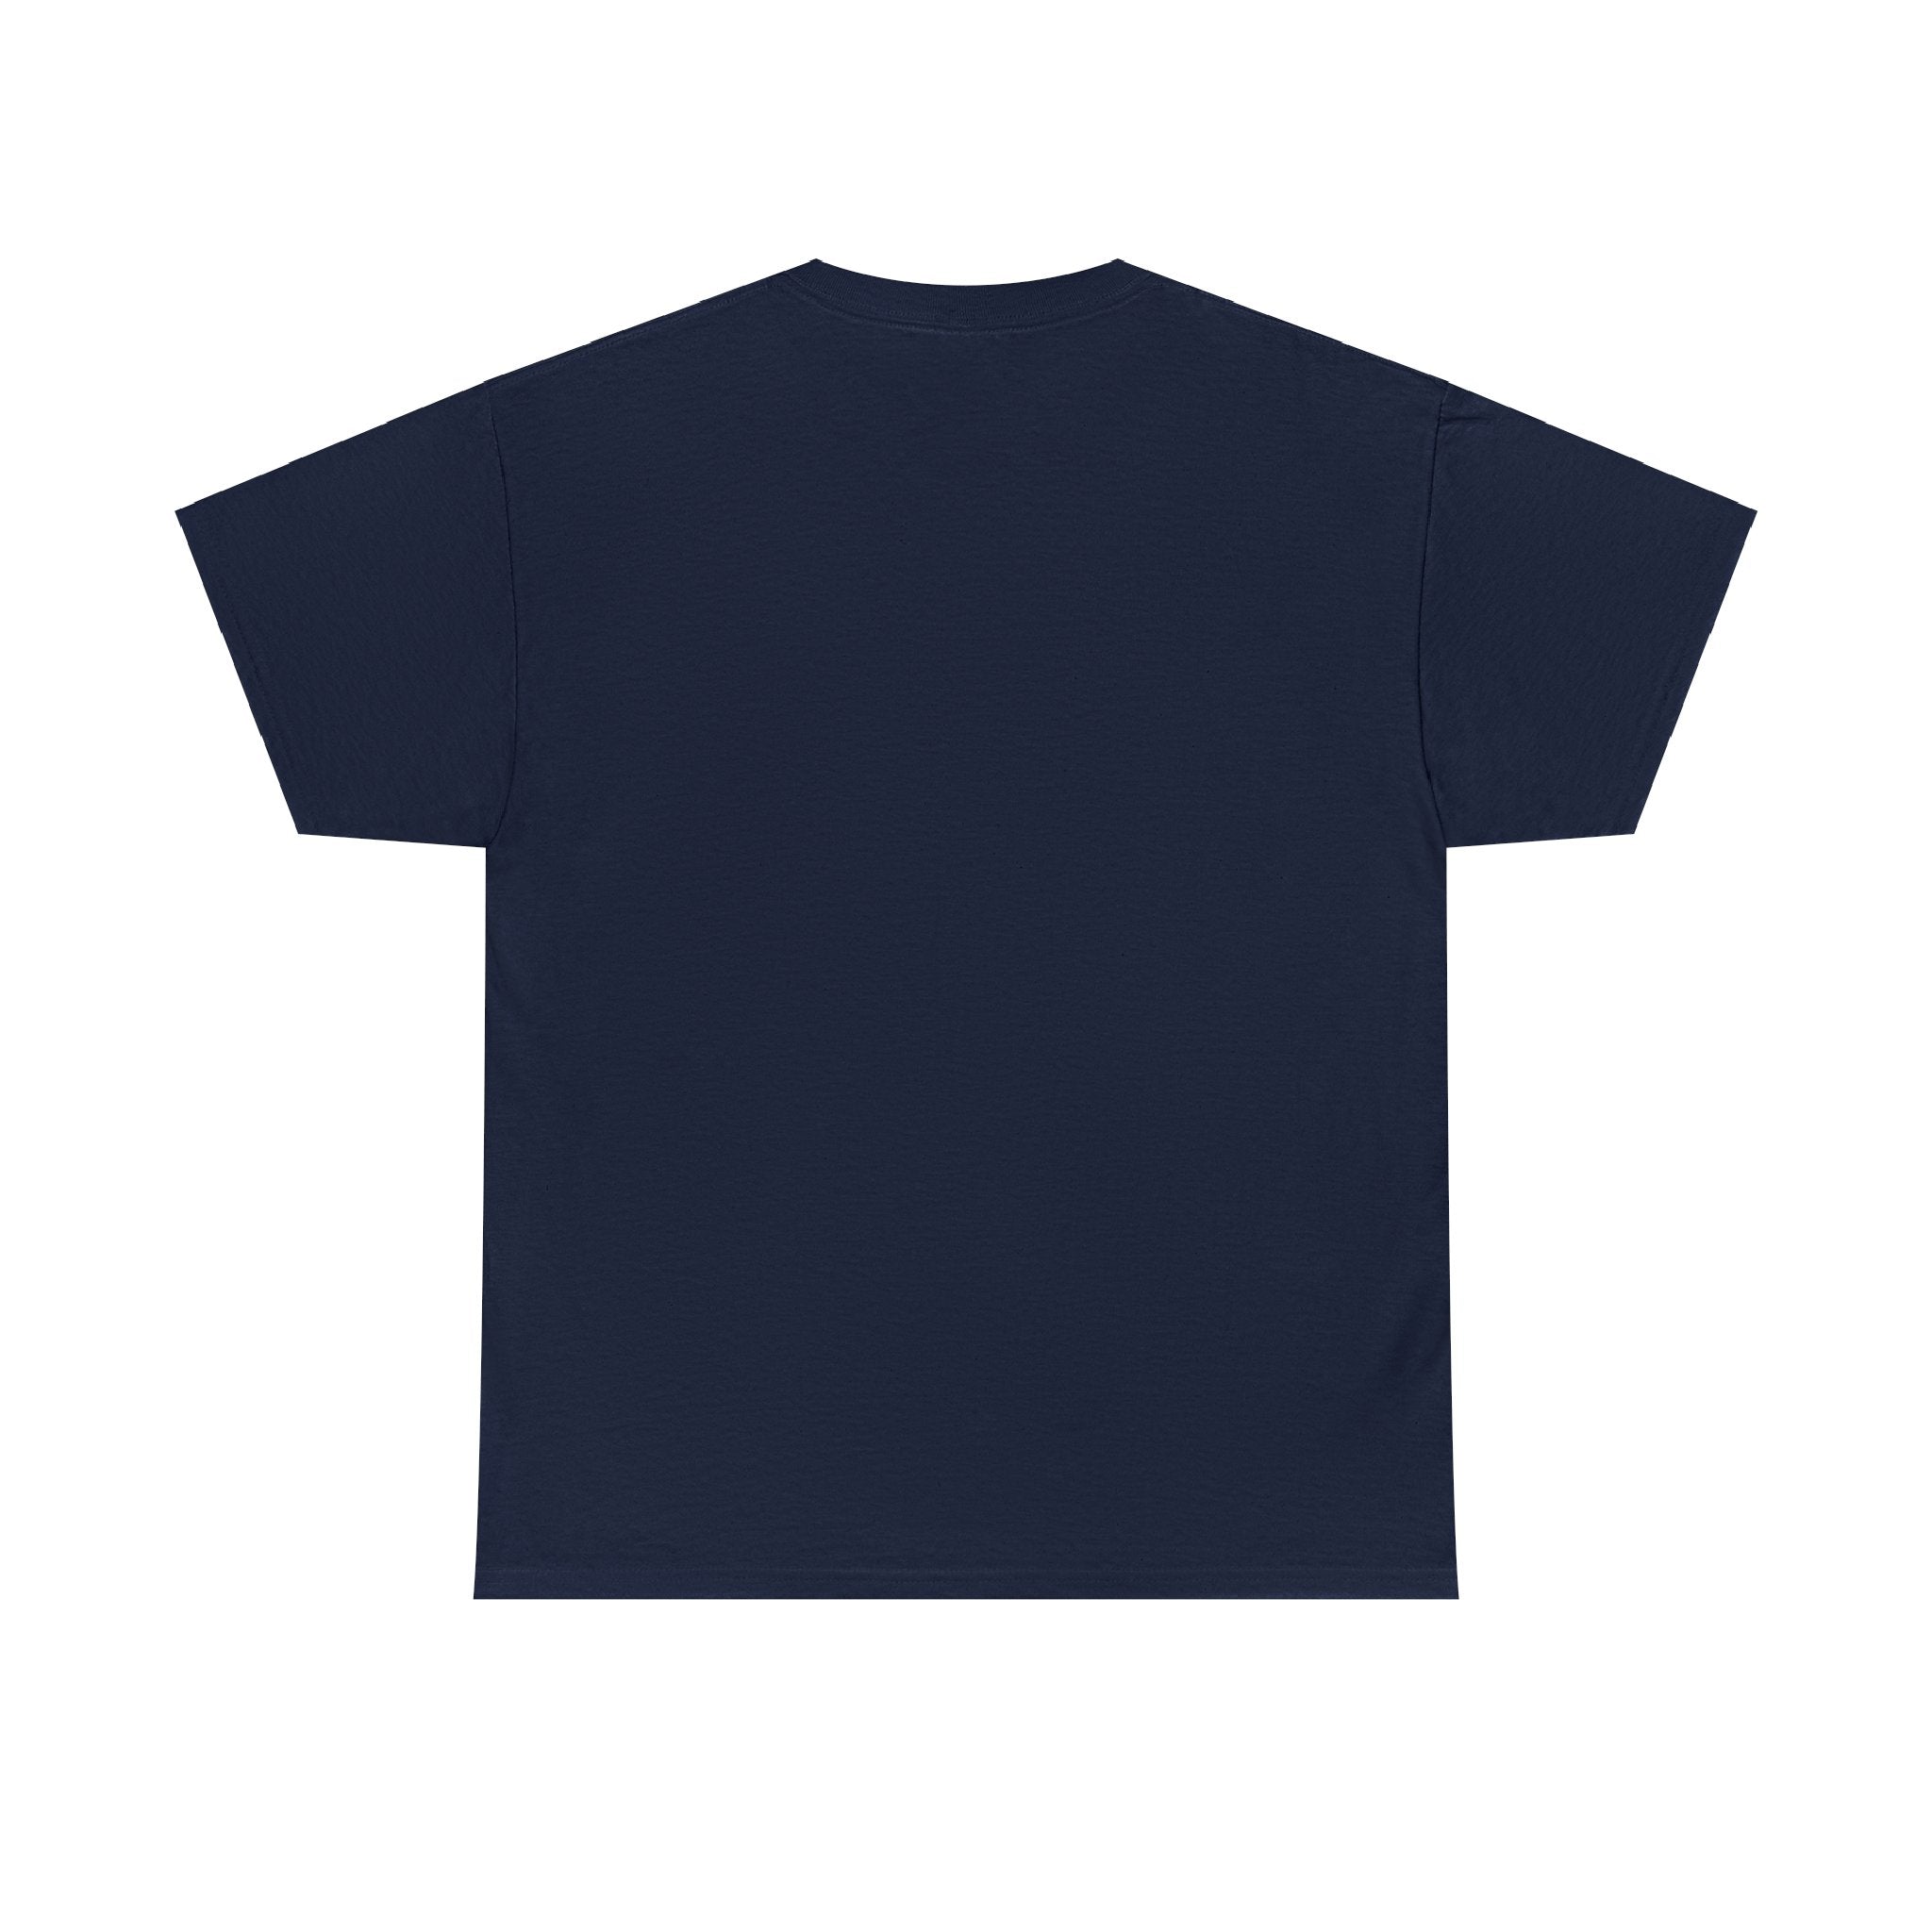 Halifax Highlanders T-Shirt